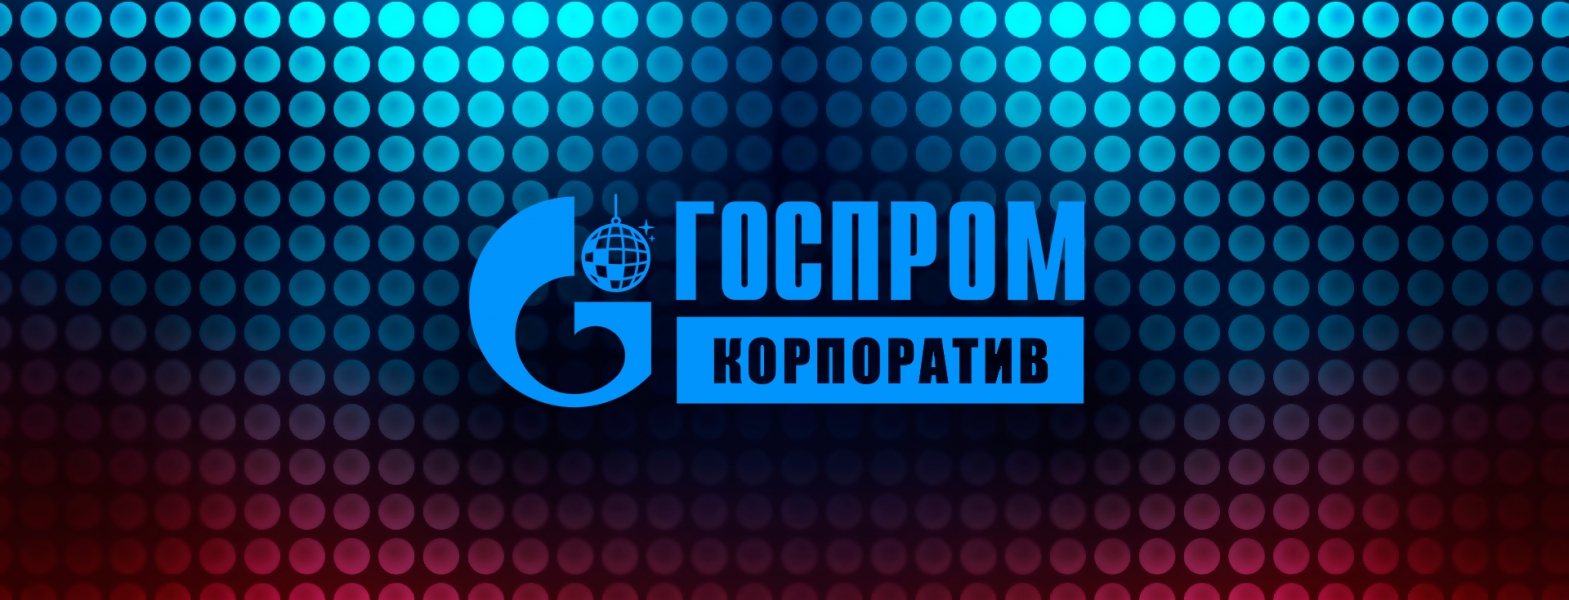 Квест Корпоратив Госпрома, ВыХод. Новосибирск.